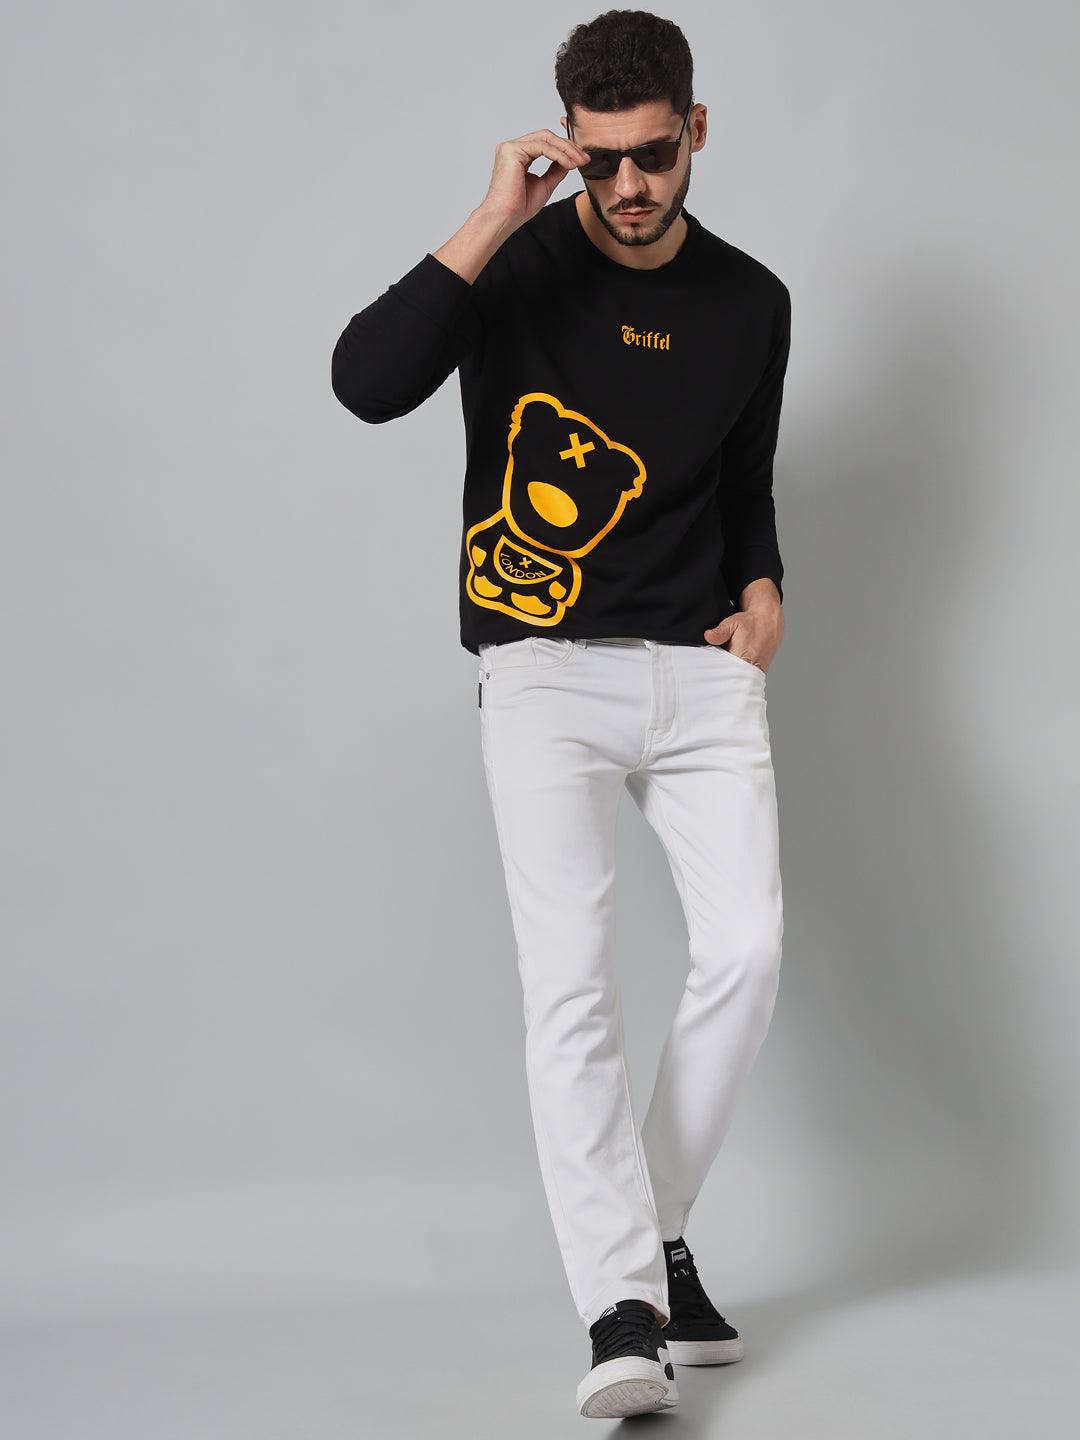 Griffel Men's Cotton Fleece Round Neck Black Sweatshirt with Full Sleeve and Teddy Logo Print - griffel